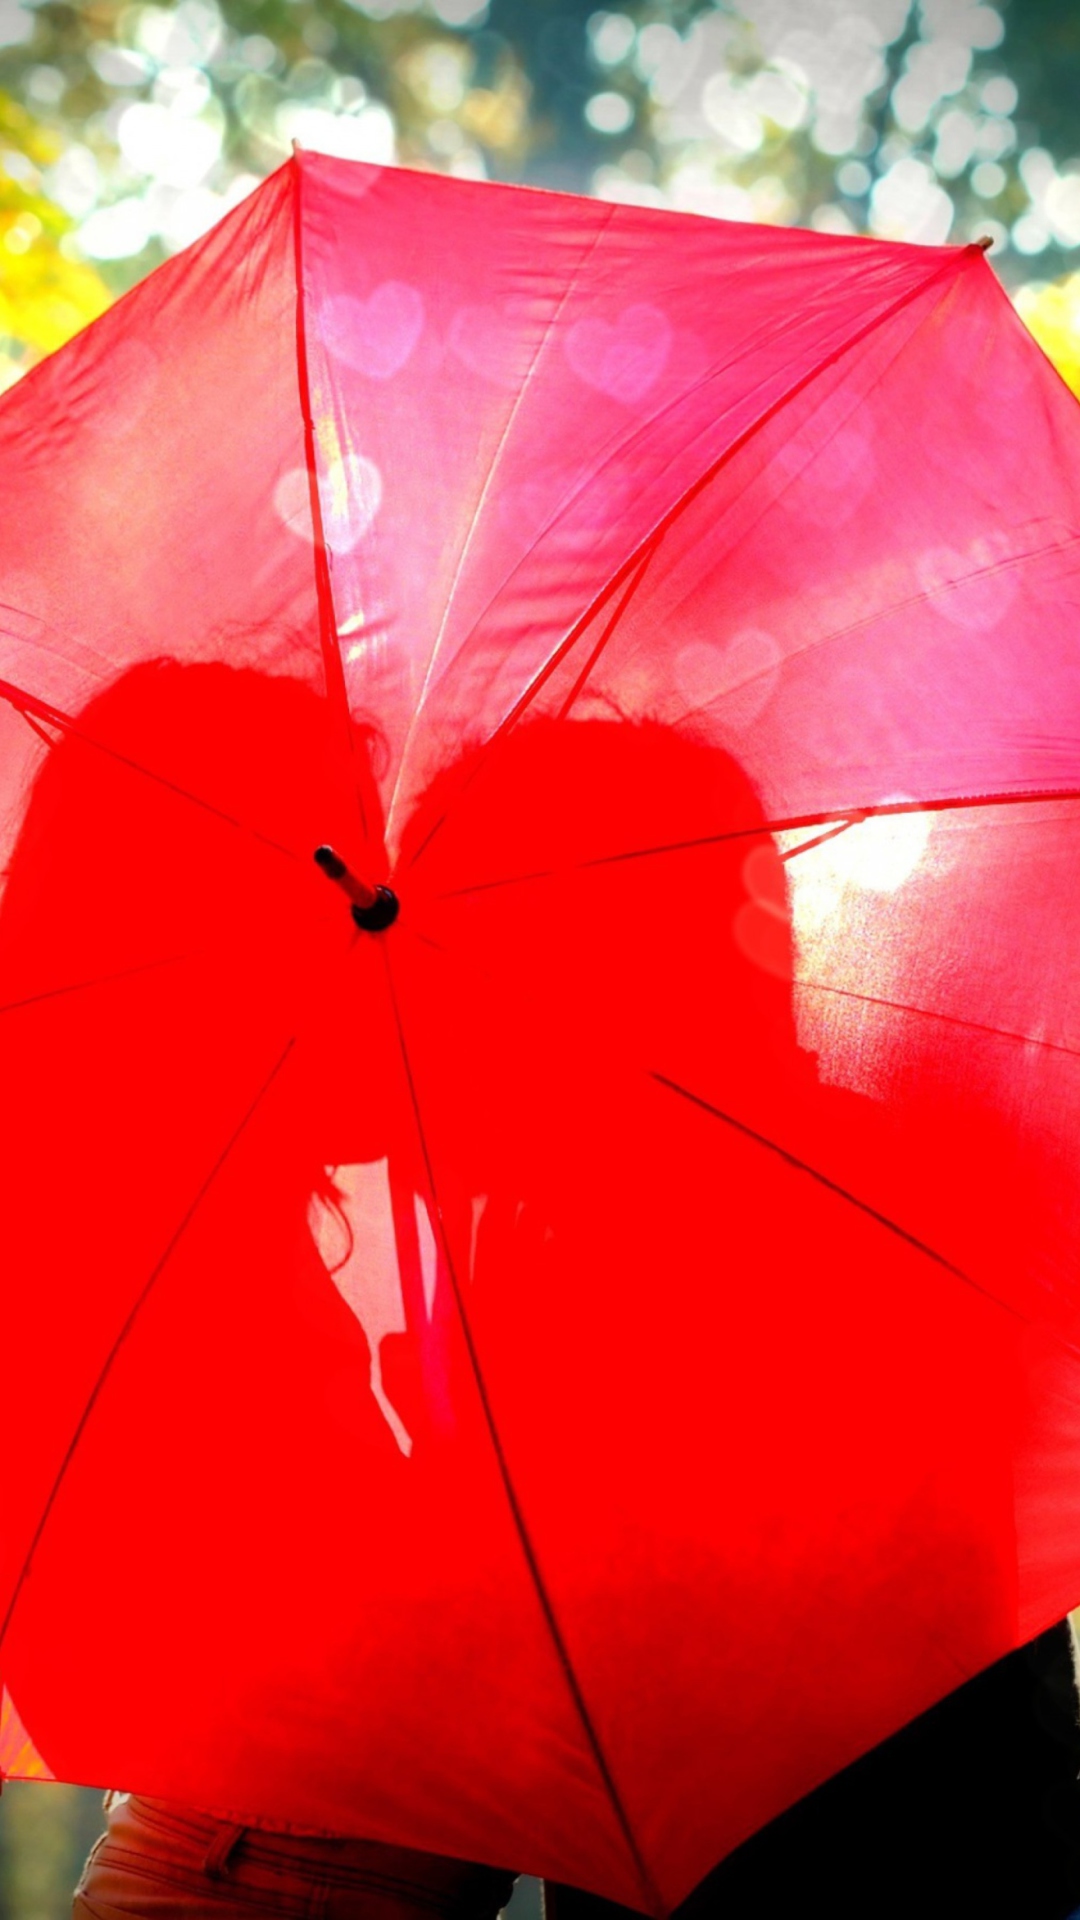 Couple Behind Red Umbrella wallpaper 1080x1920